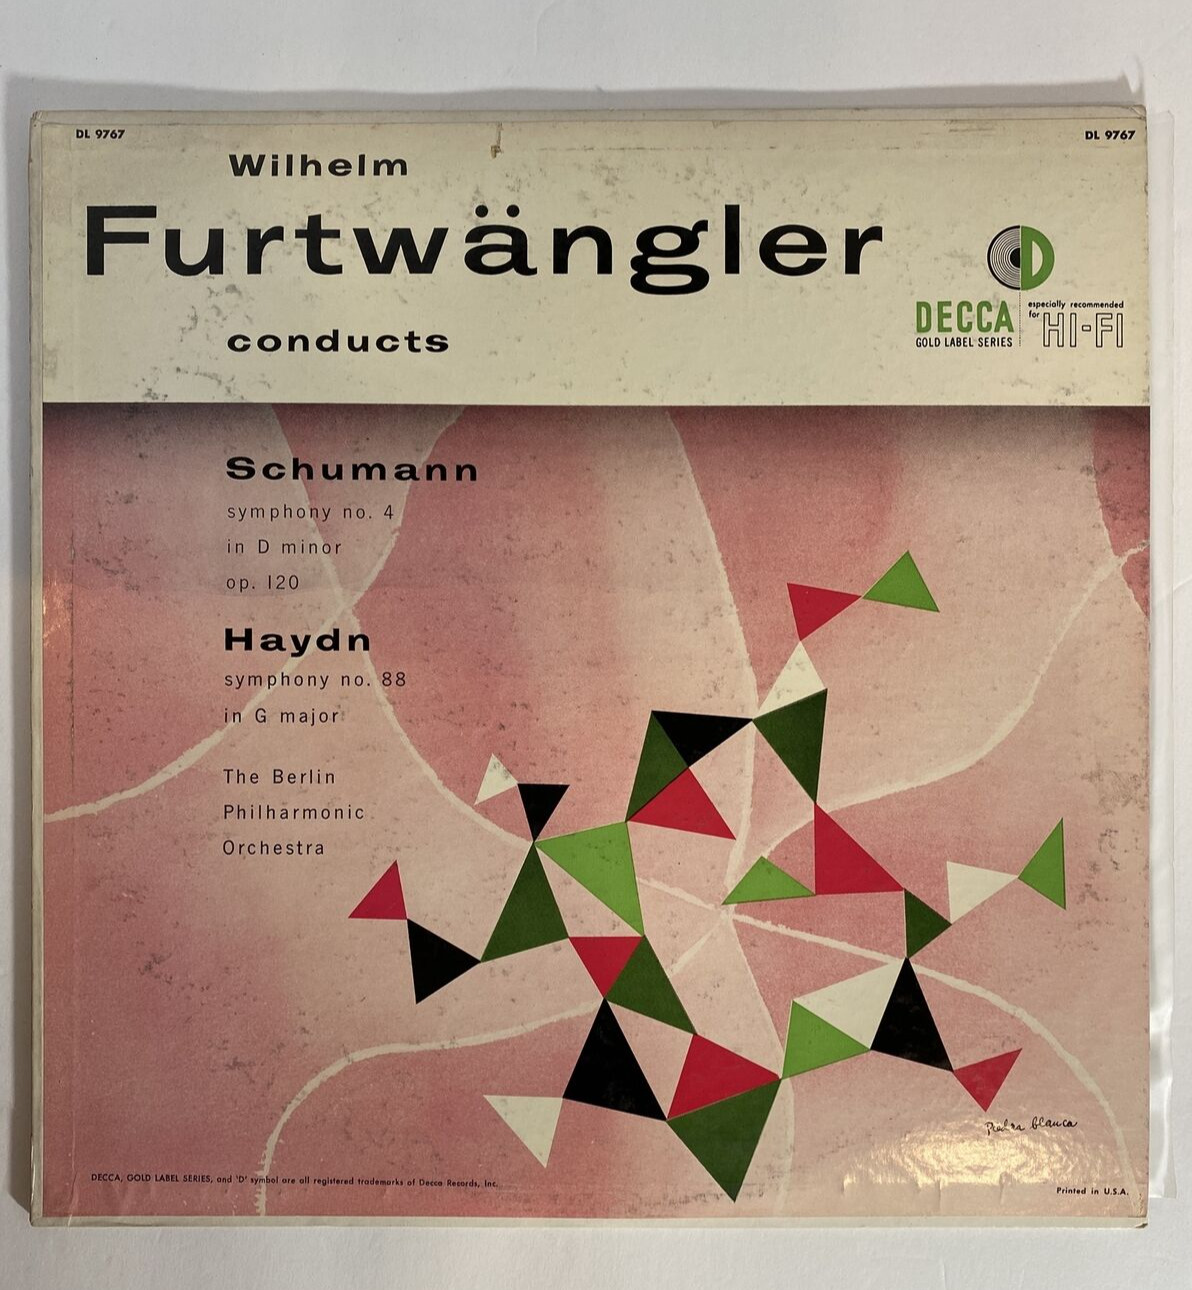 Furtwangler Conducts Berlin - Schumann 4, Haydn 88, Decca DL 9767